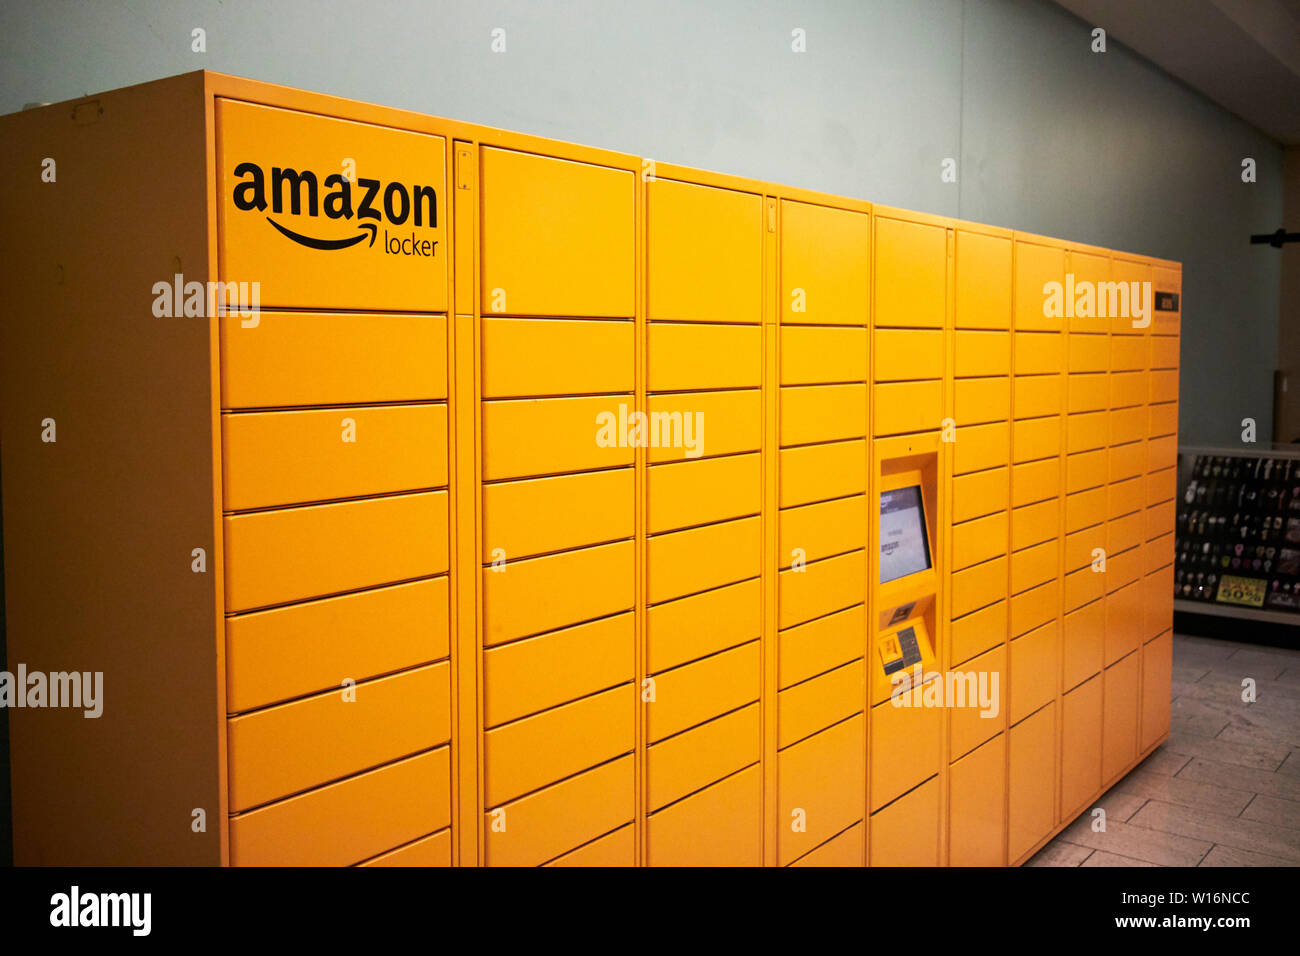 Amazon locker pickup hi-res stock photography and images - Alamy